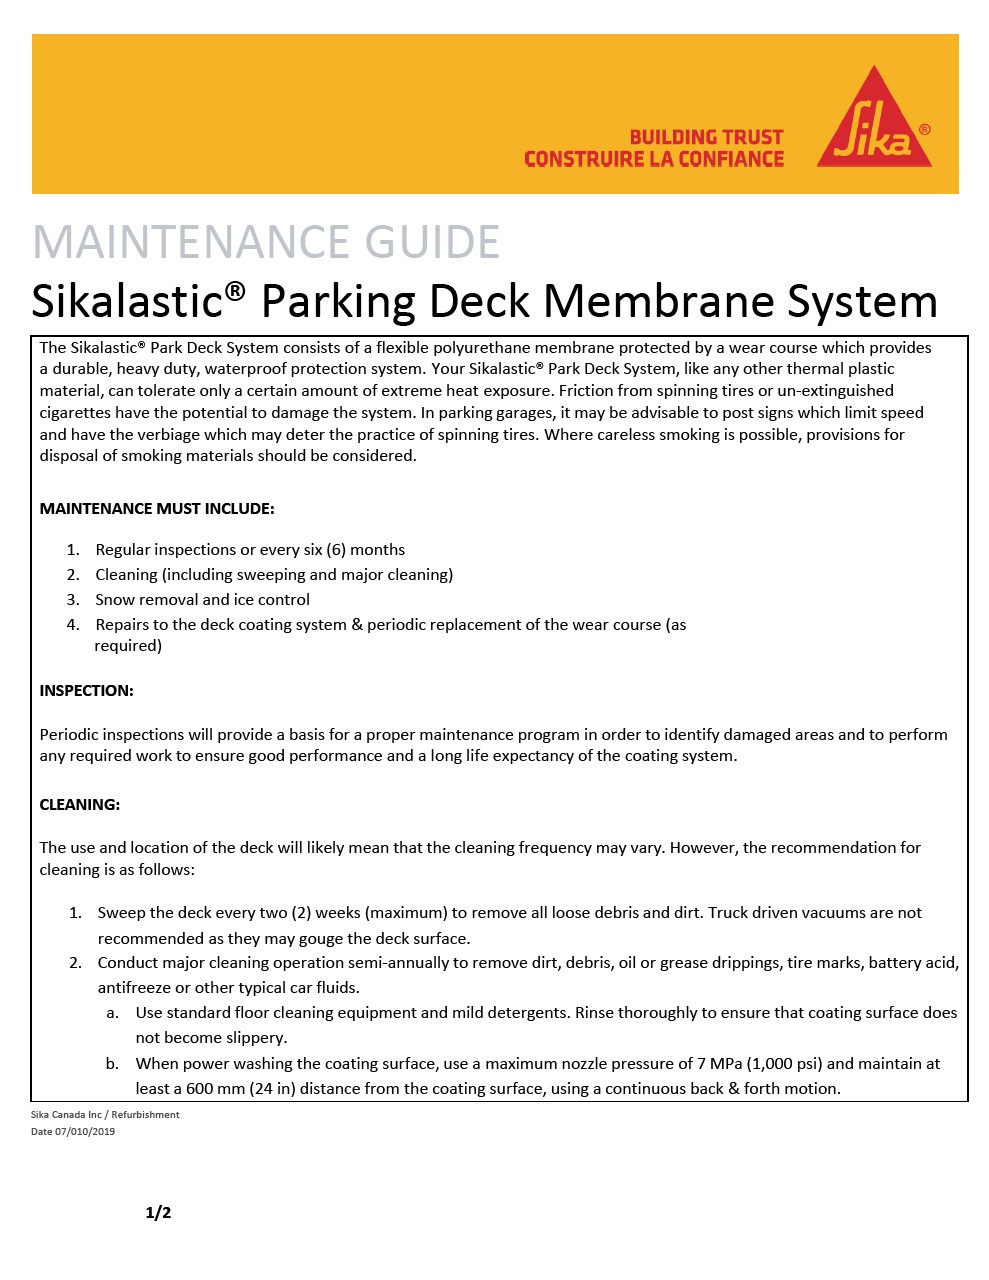 Sikalastic® Parking Deck Membrane System